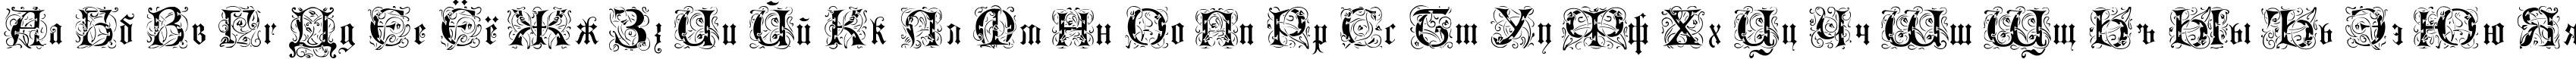 Пример написания русского алфавита шрифтом Lombardina Initial One